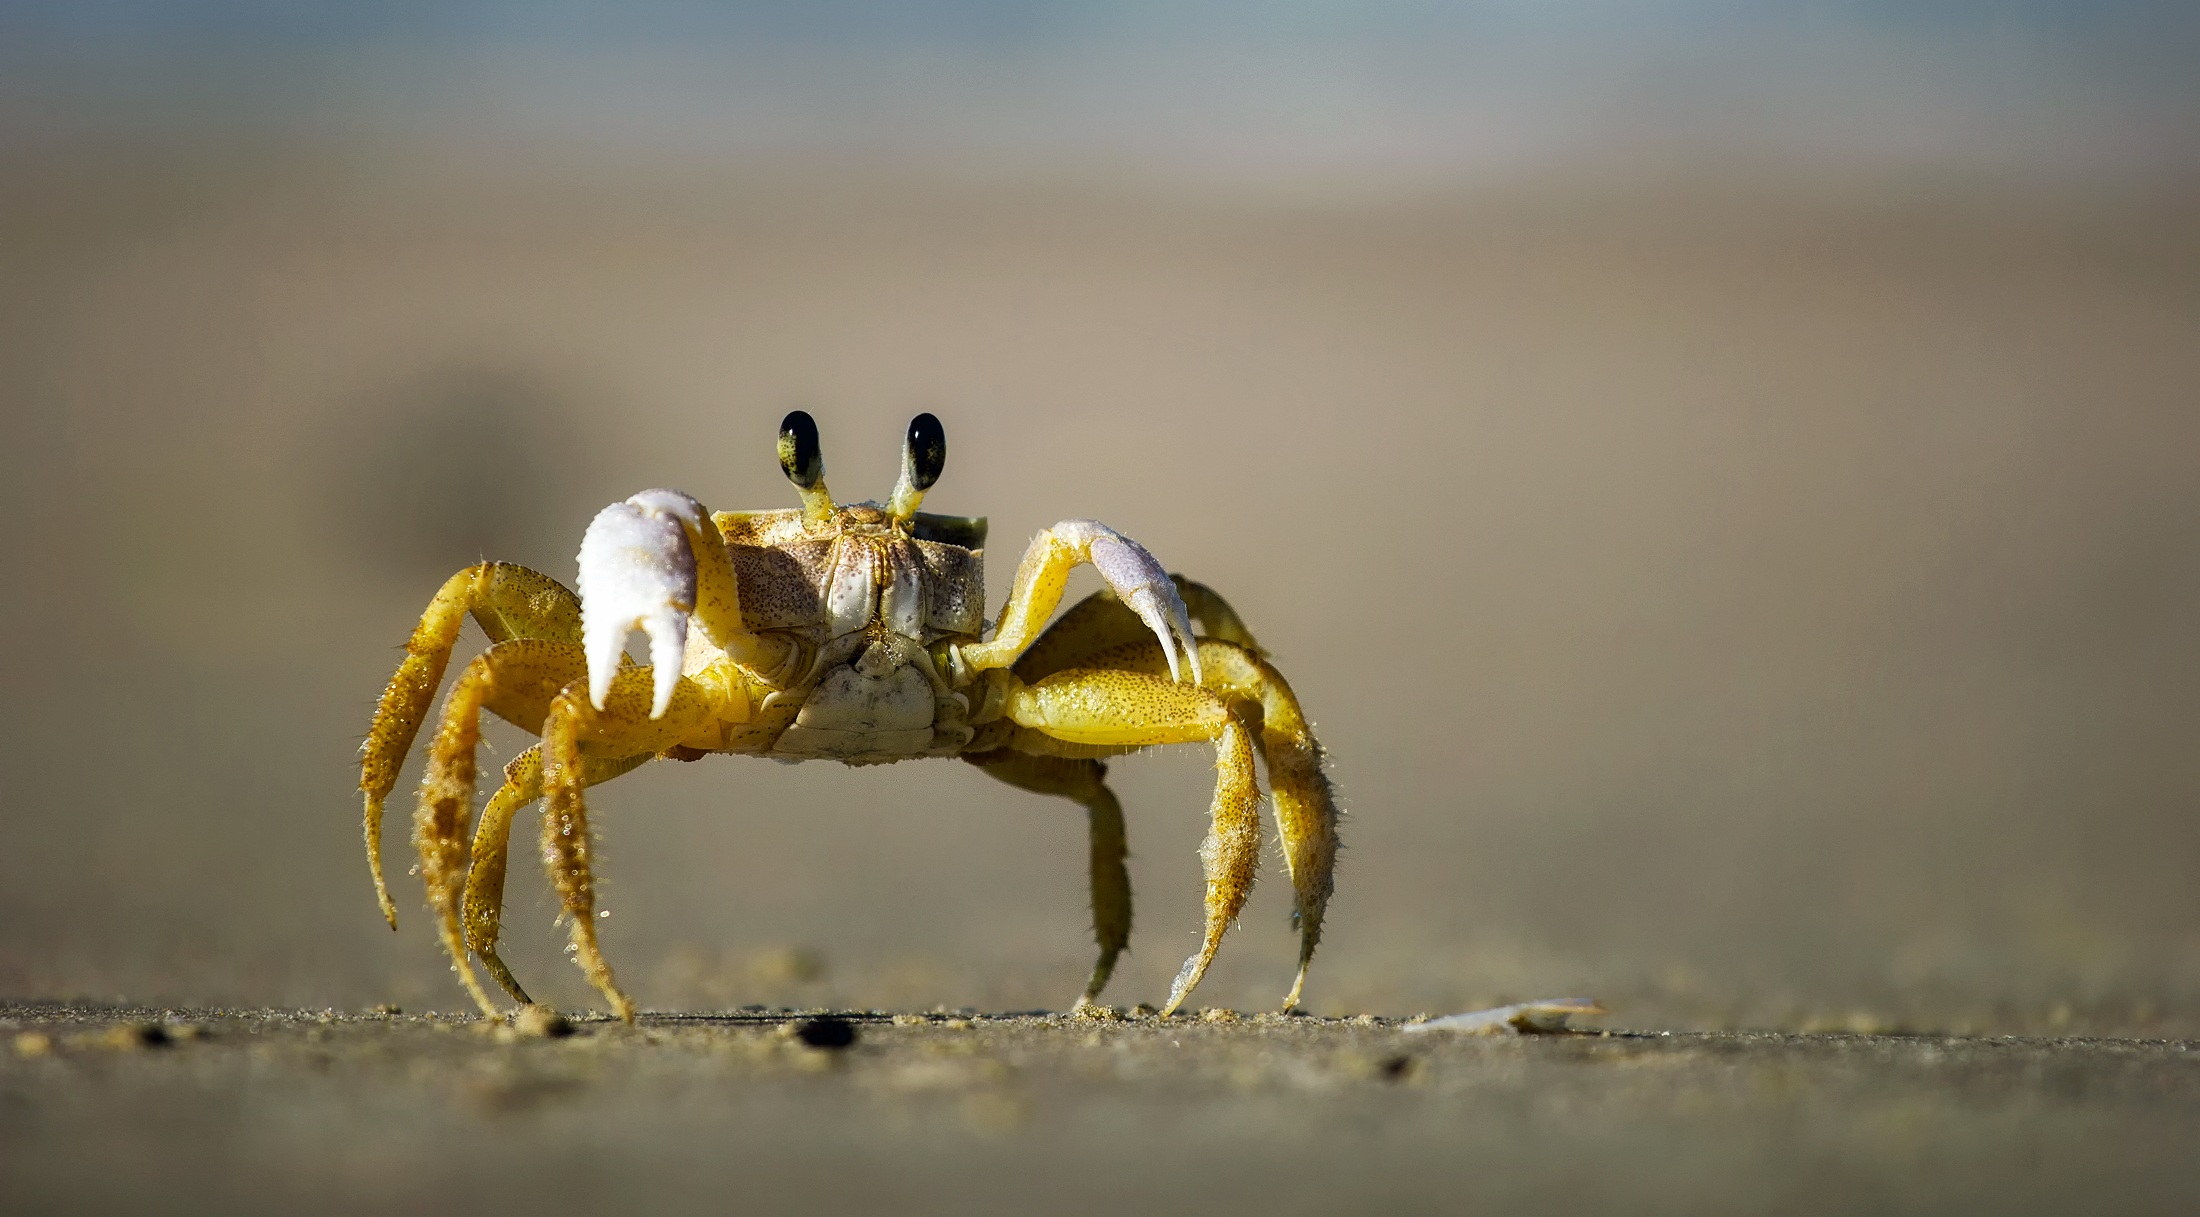 A yellow crab walks on the sandy beach